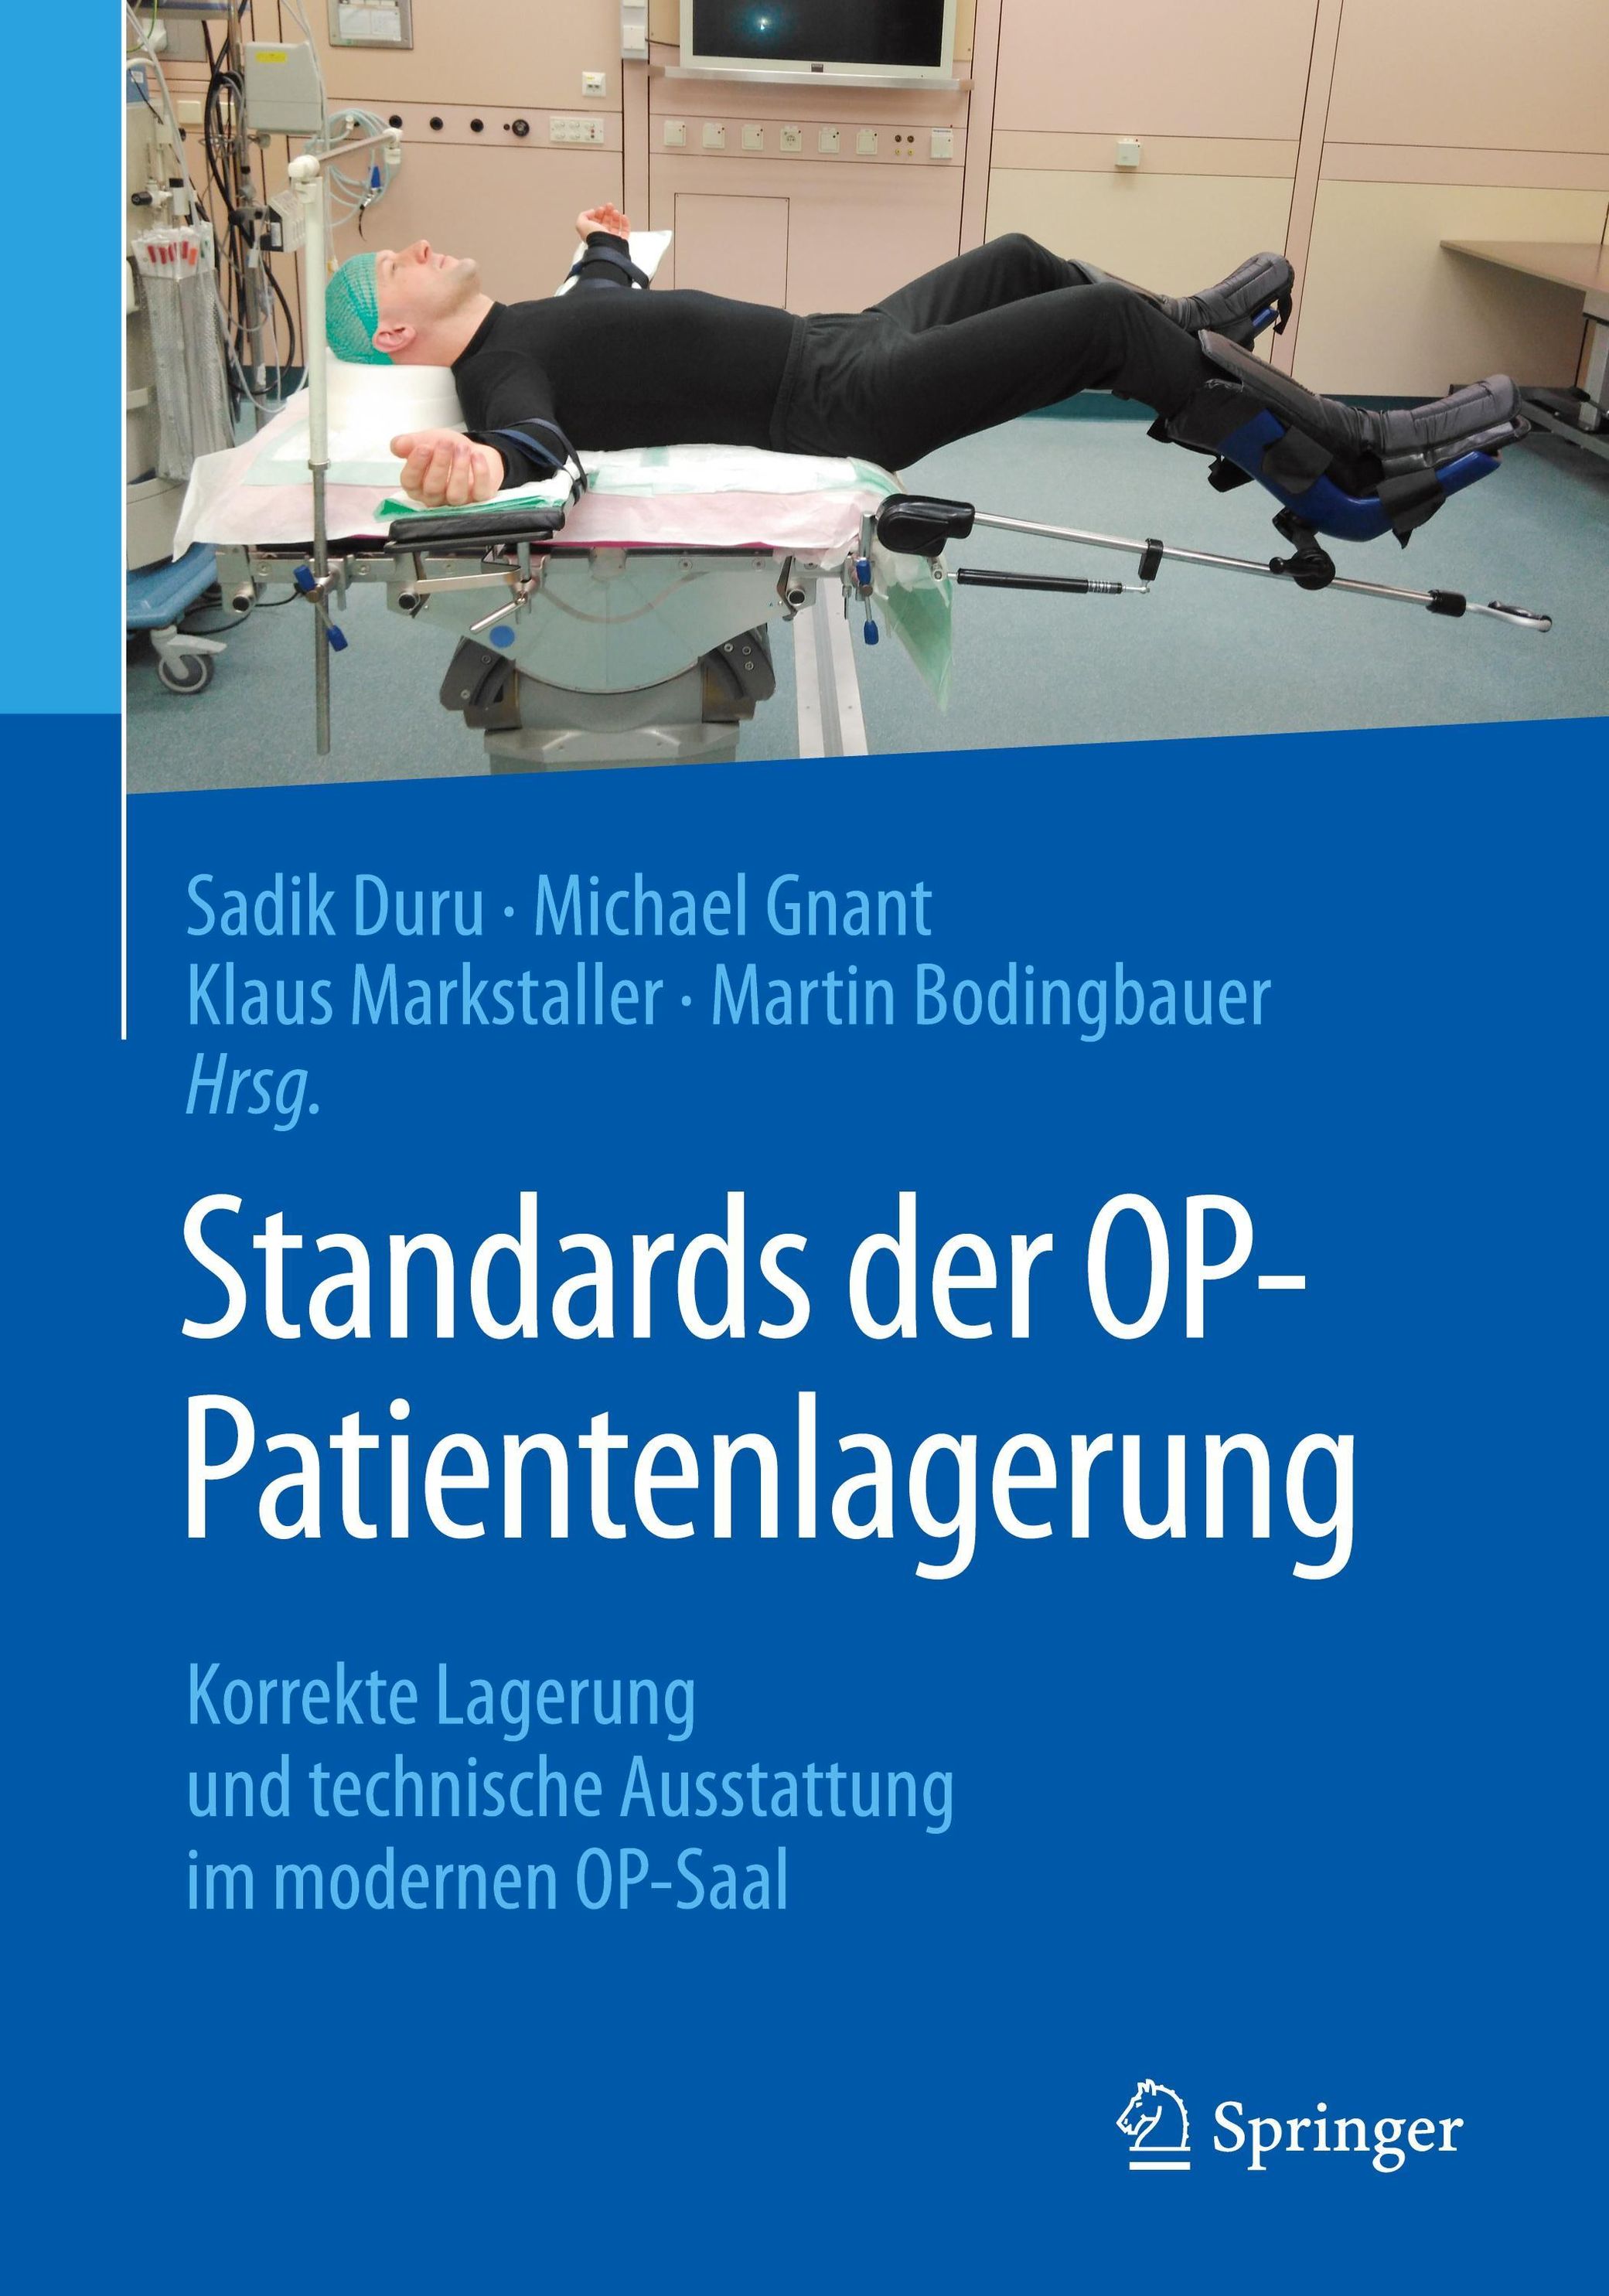 Standards der OP-Patientenlagerung Buch versandkostenfrei bei Weltbild.de  bestellen